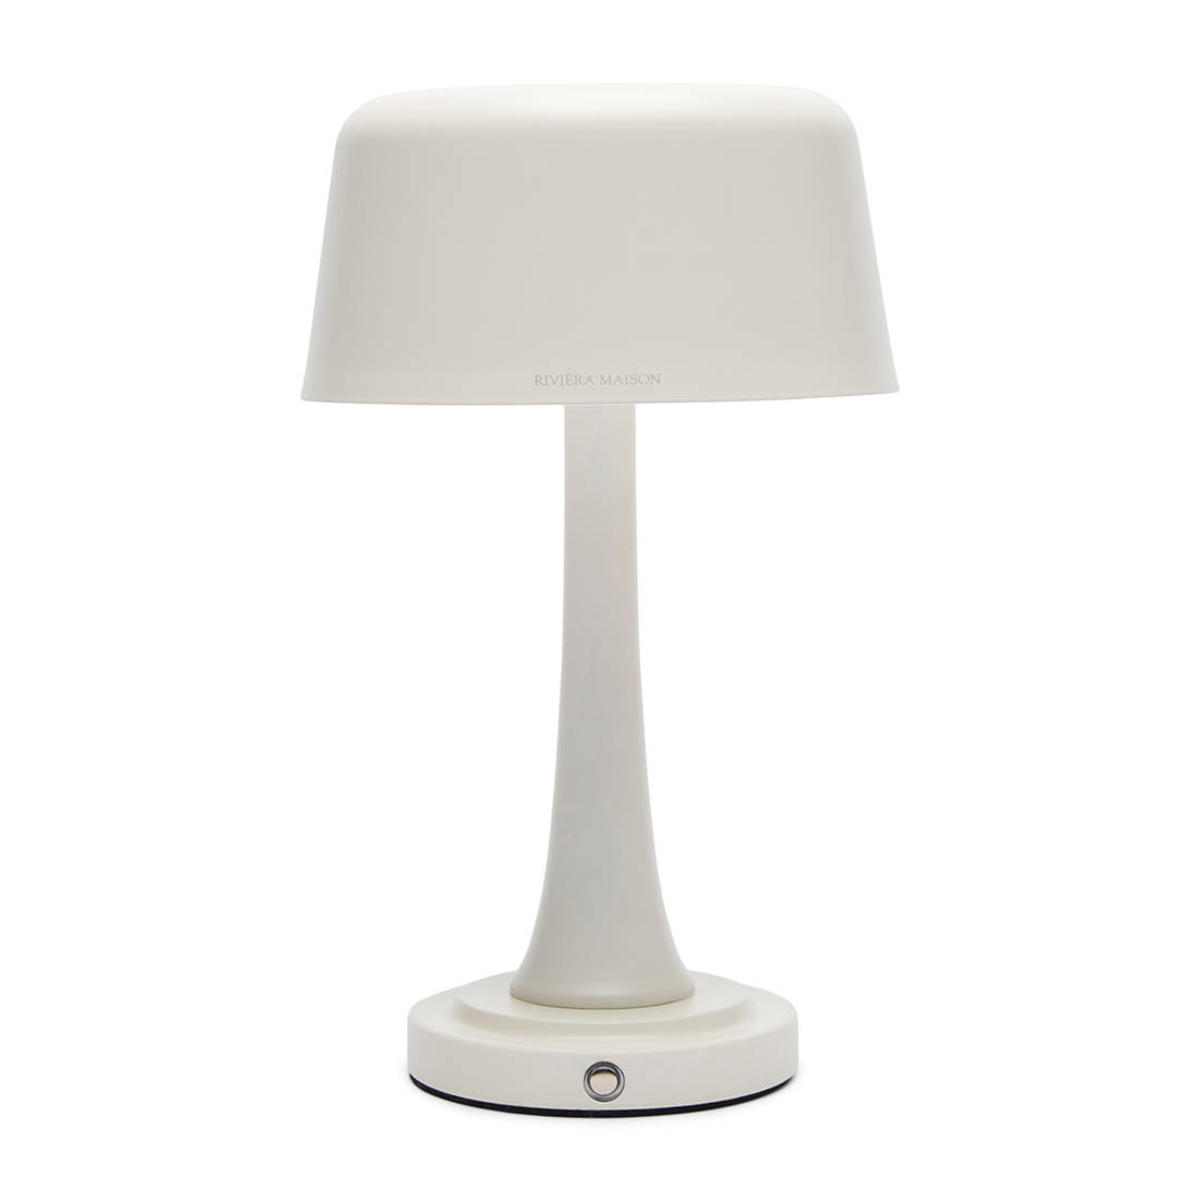 Makkelijk te lezen Bedoel opstelling Riviera Maison tafellamp Bellagio RM Bellagio LED Table Lamp white | wehkamp